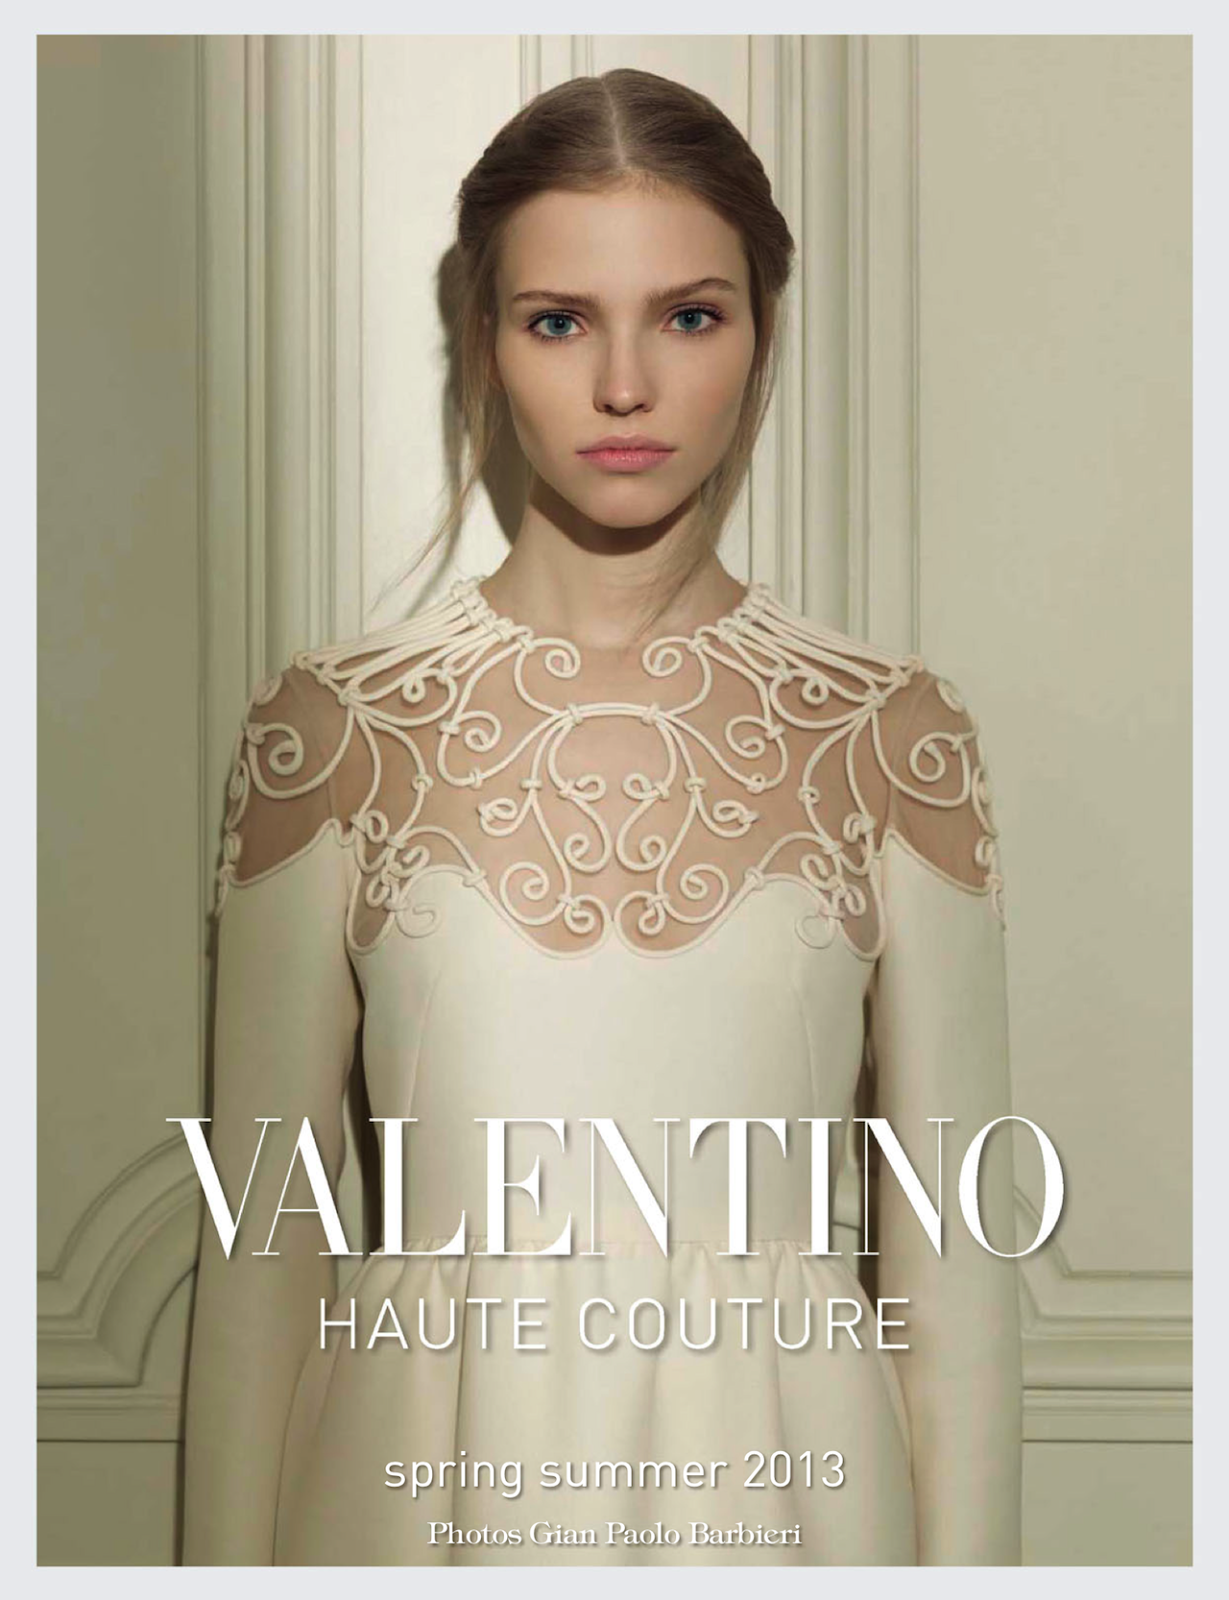 Саша Лусс. Valentino весна-лето 2013. Публикация: Vogue Italia, март 2013. Джан Паоло Барбьери (Gian Paolo Barbieri) - итальянский фэшн-фотограф. Арт-фото. Фэшн-фотография, модная фотография